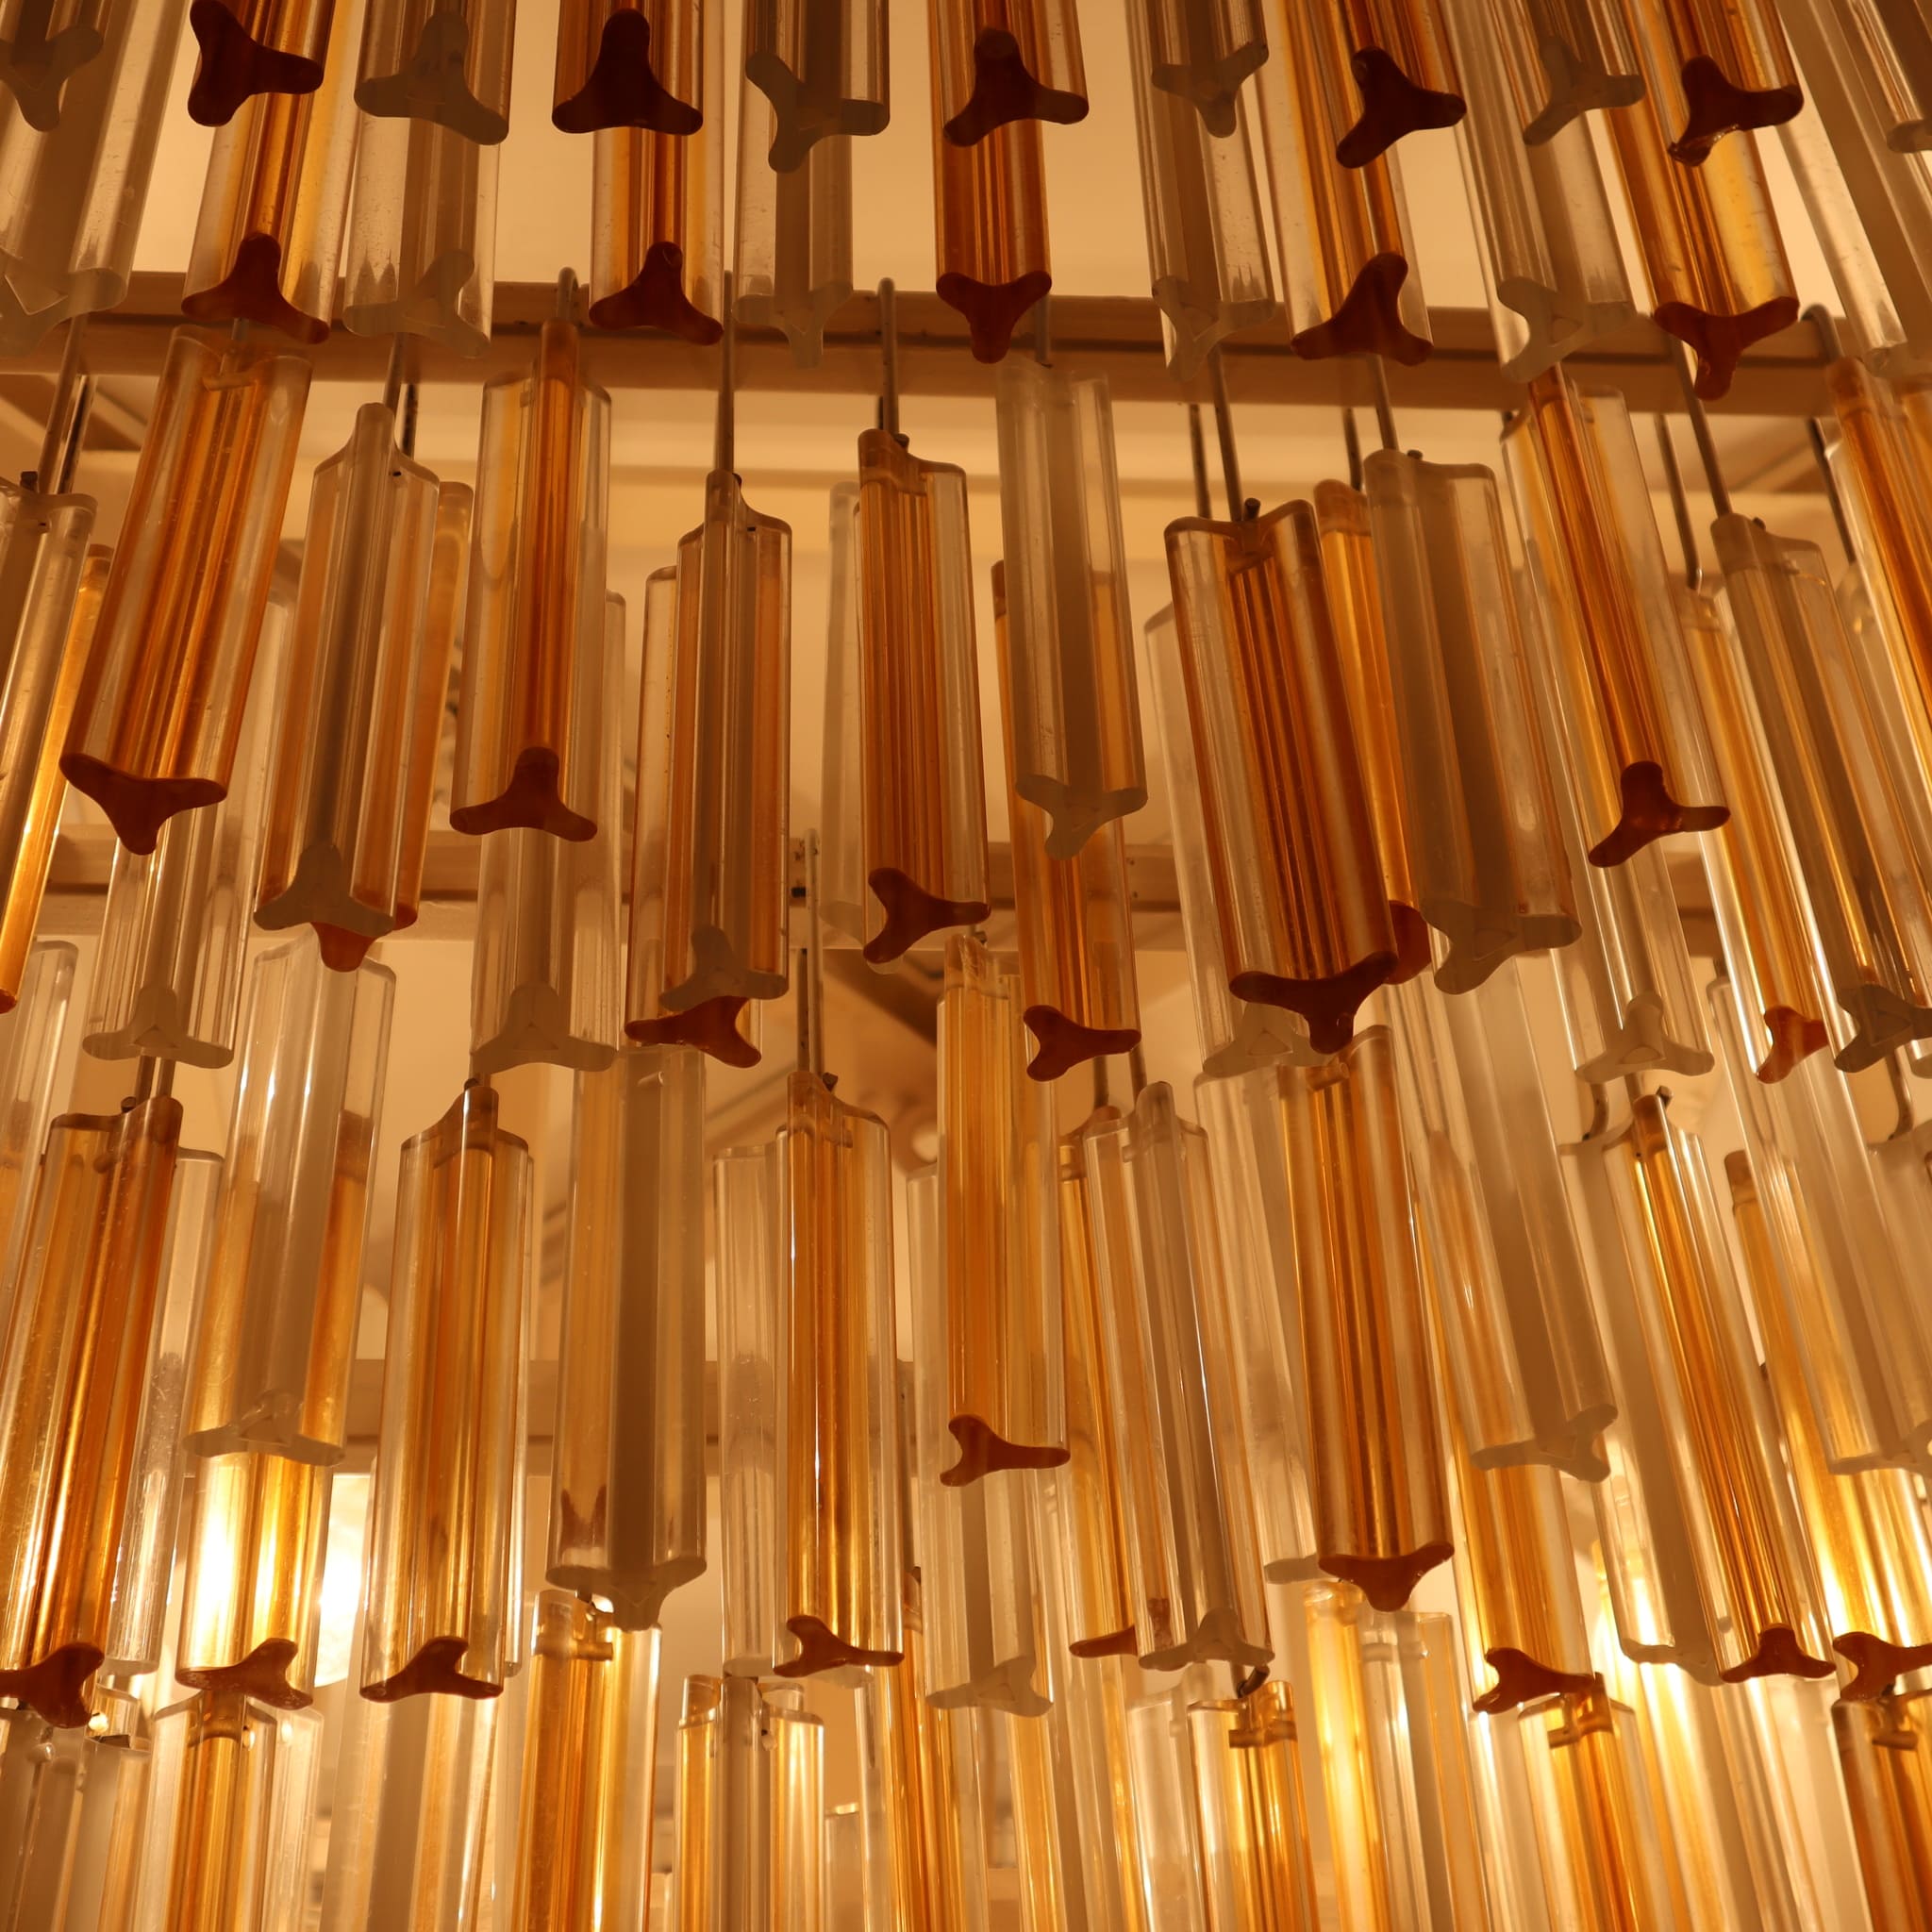 visionidepoca-modern-art-venini-chandelier-trilobes-murano-glass-70s-750-pieces-detail-trilobes-lit